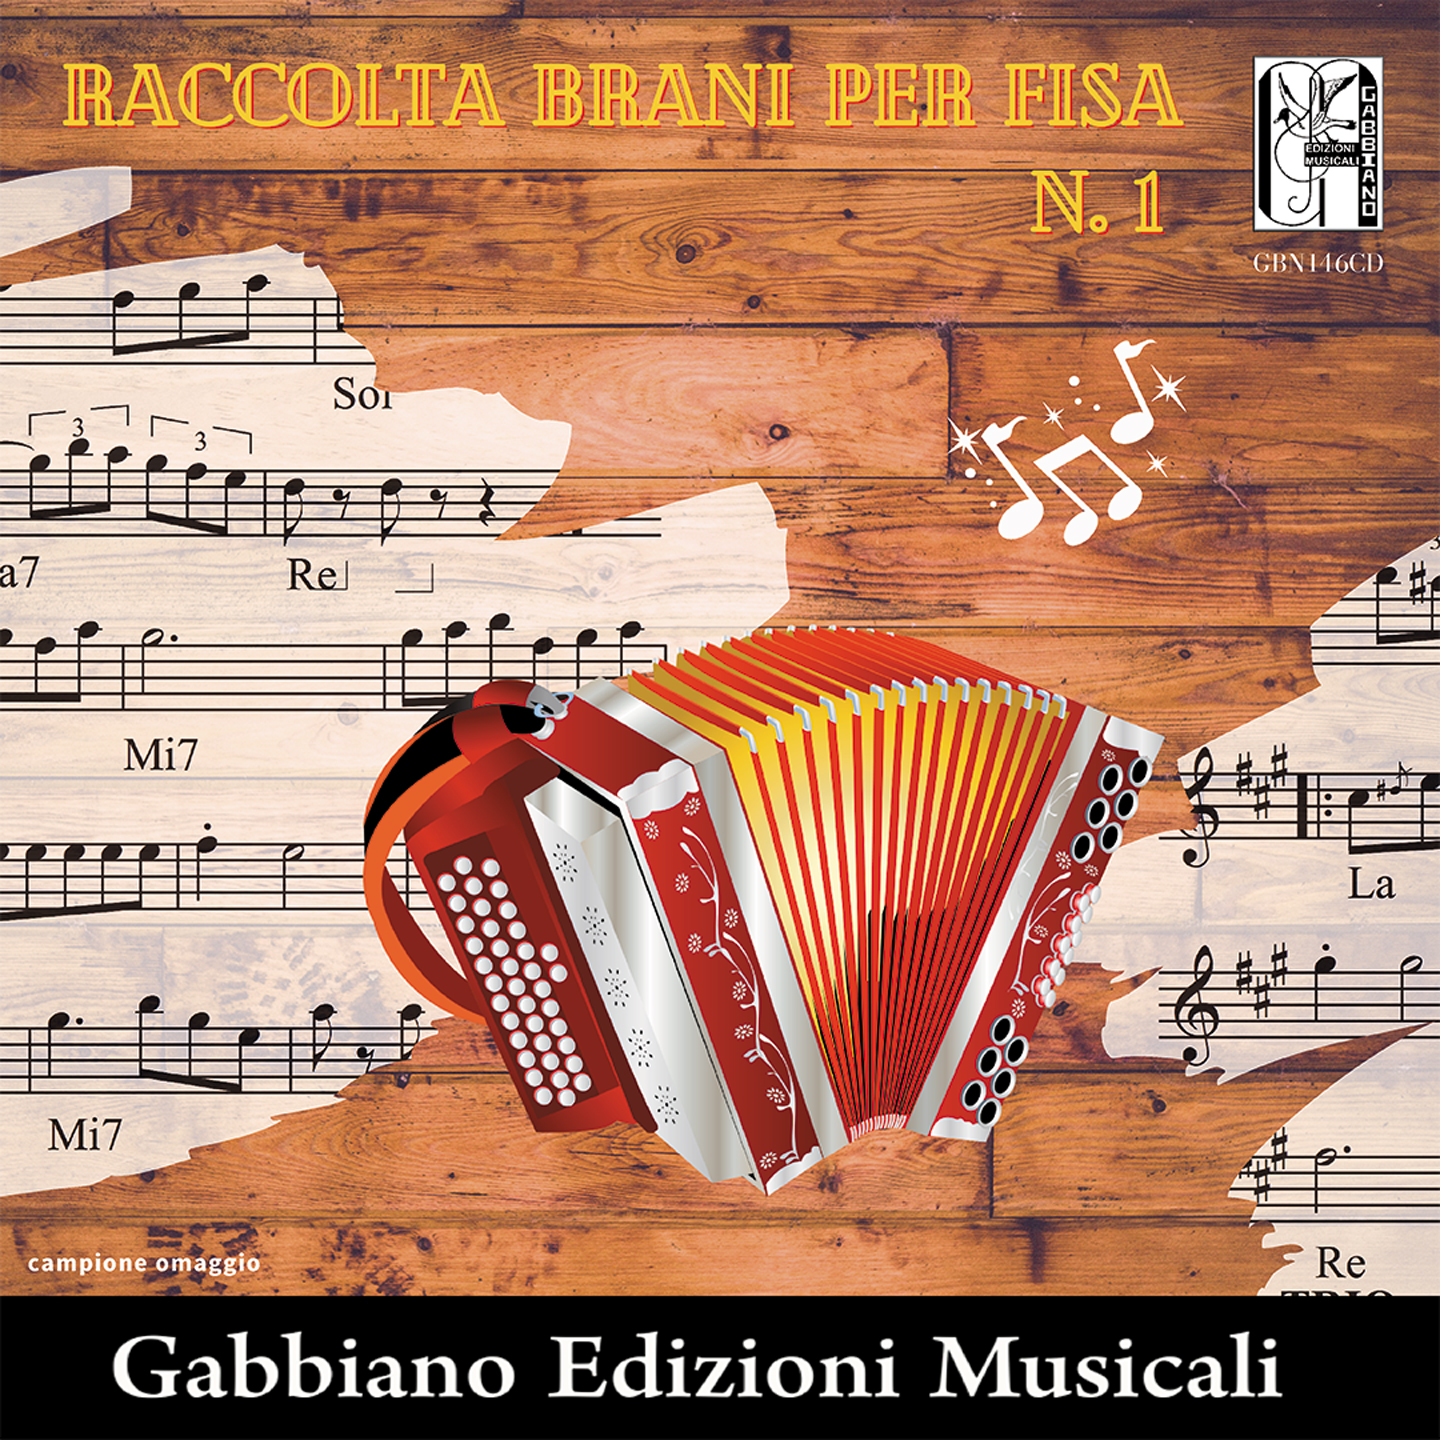 GBN146CD/CL - RACCOLTA BRANI PER FISA N. 1 - Volume 